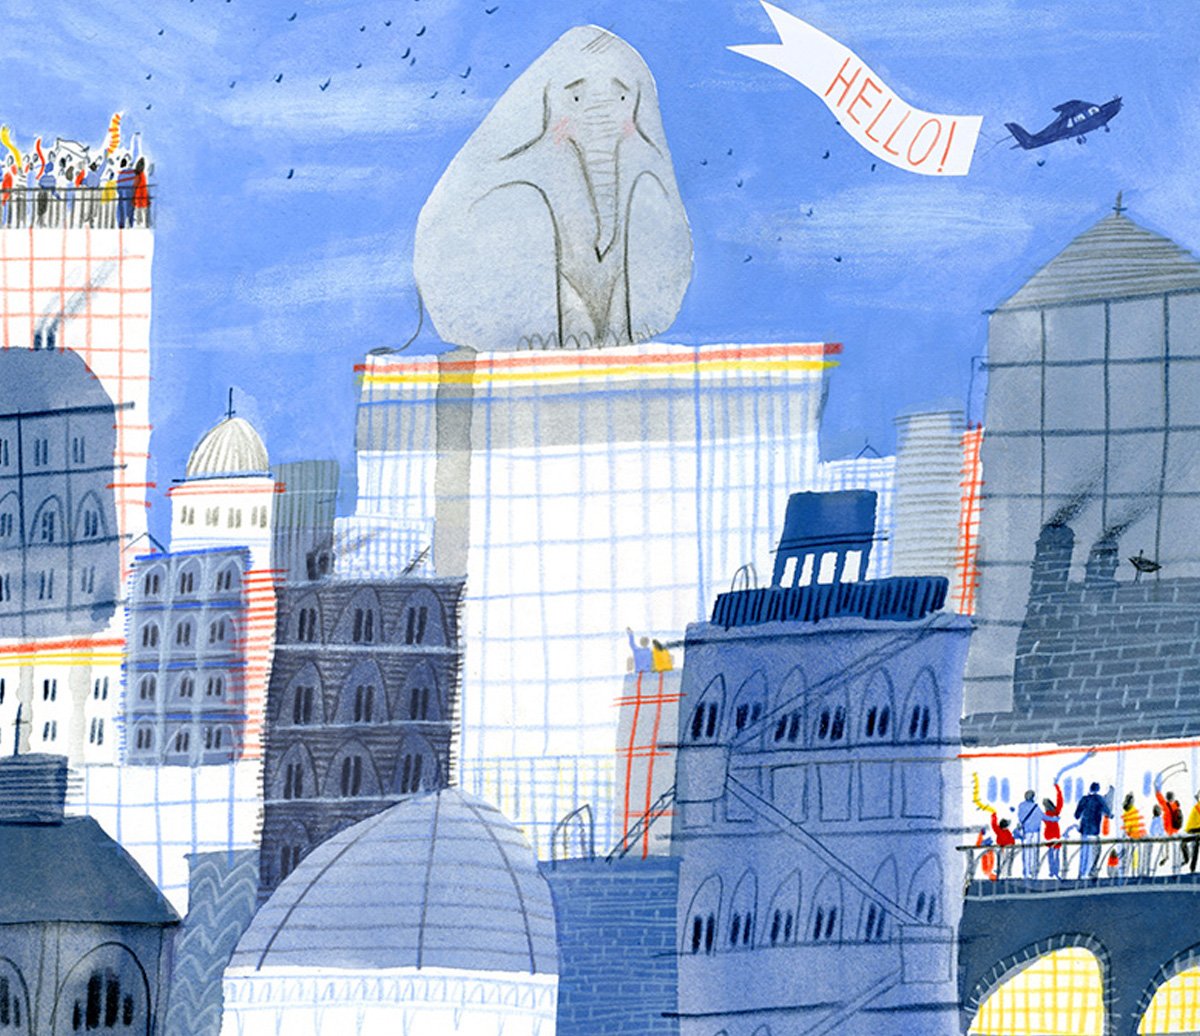 harriet-hobday-elephant-in-the-city-illustration.jpg